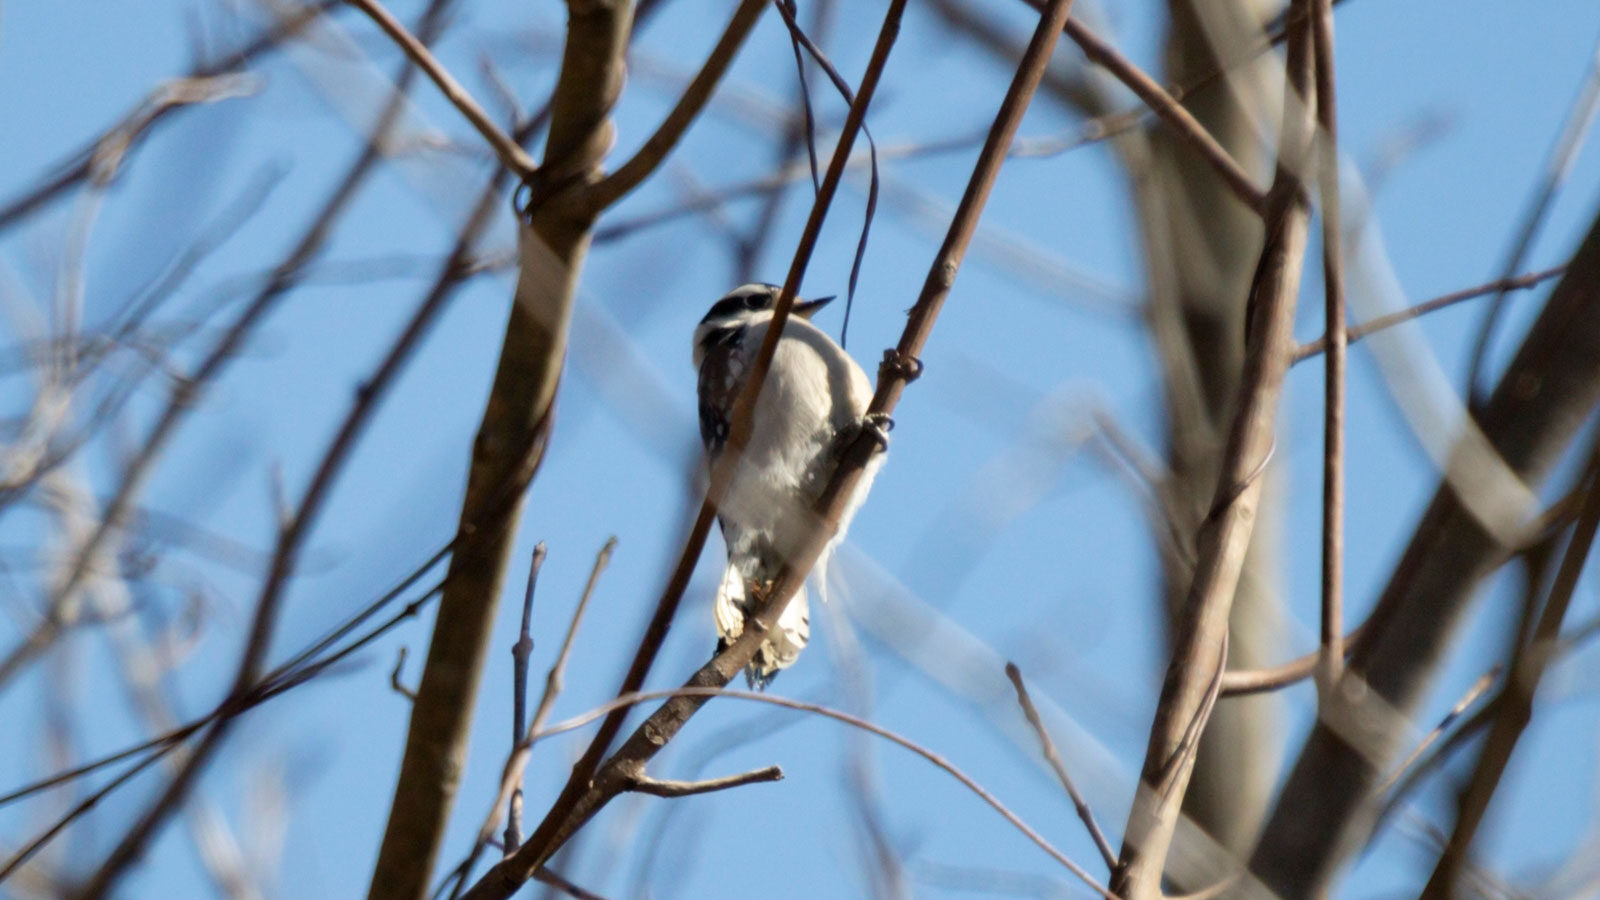 Downy woodpecker foraging on a thin limb